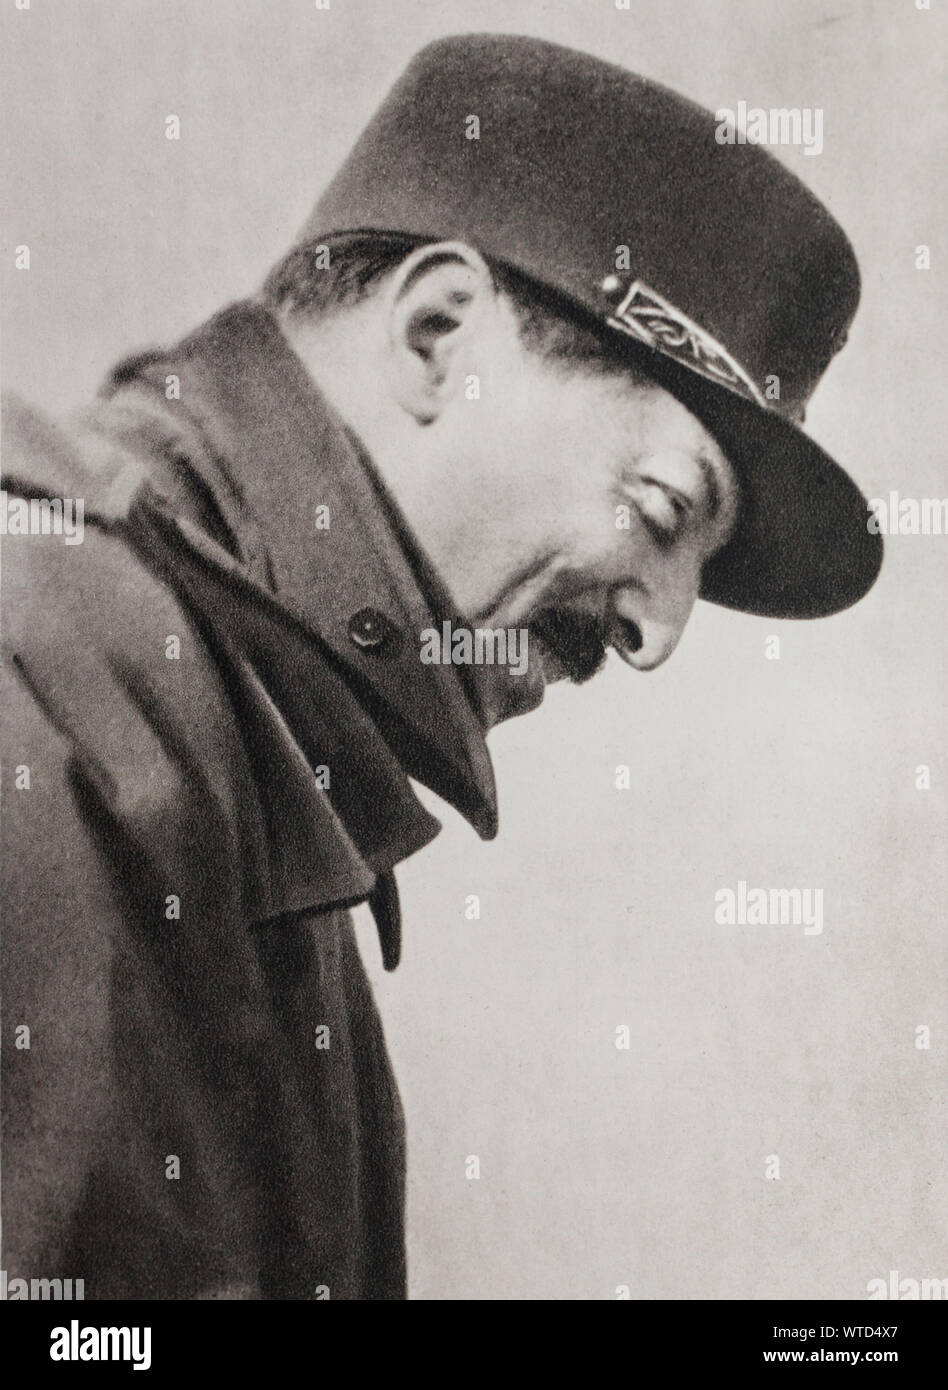 Il generale francese Konig che ha arrestato Rommel in Bir Hakim Foto Stock